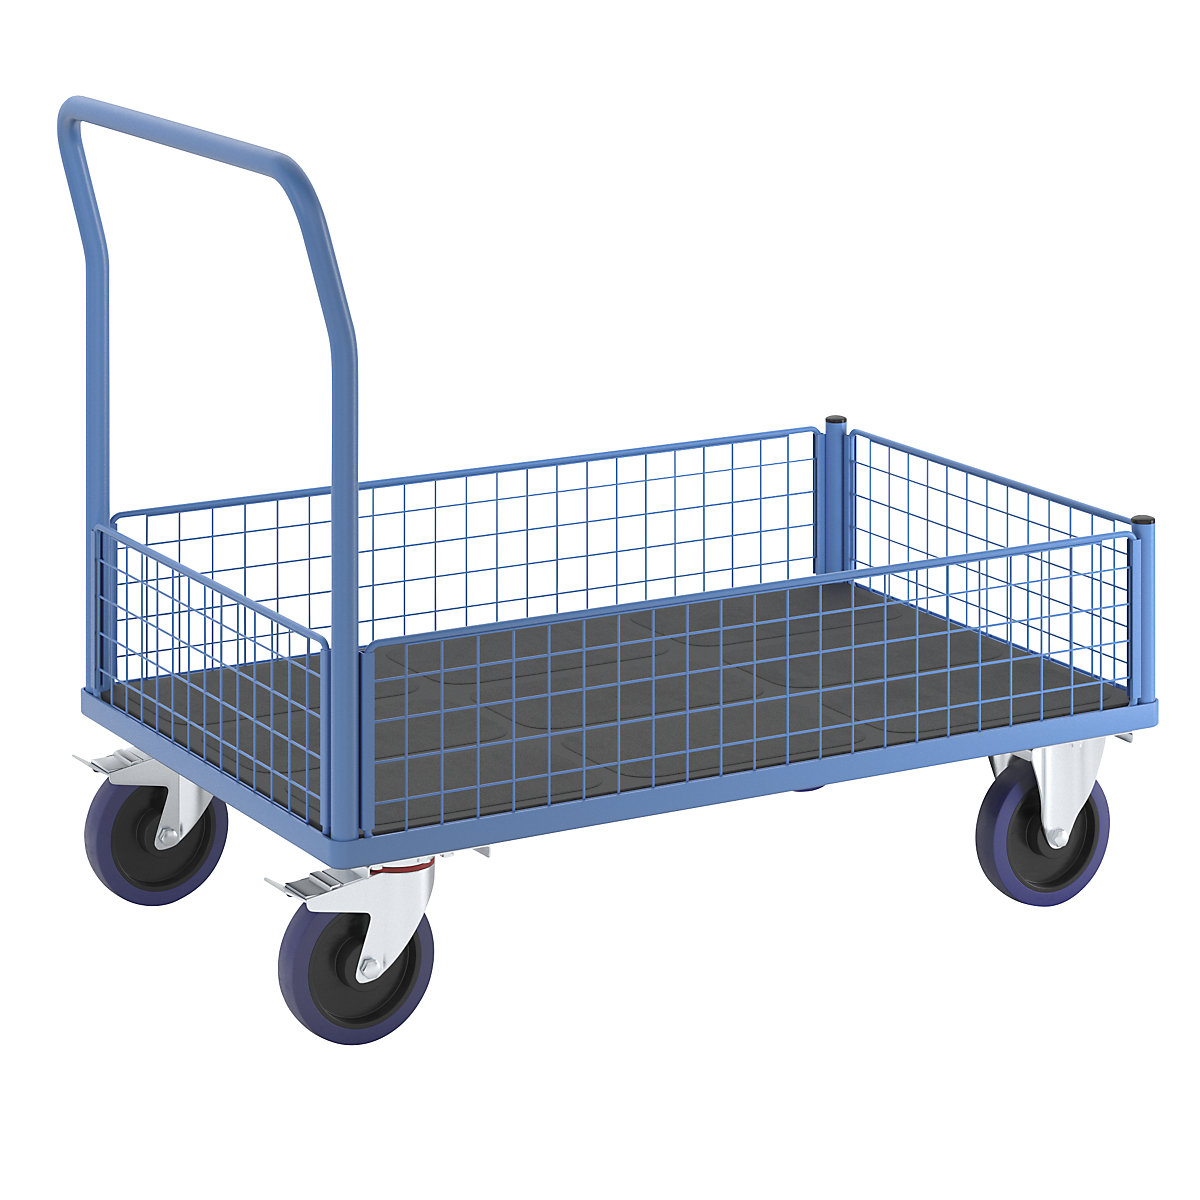 Plošinový vozík s mřížkami v poloviční výšce – eurokraft pro